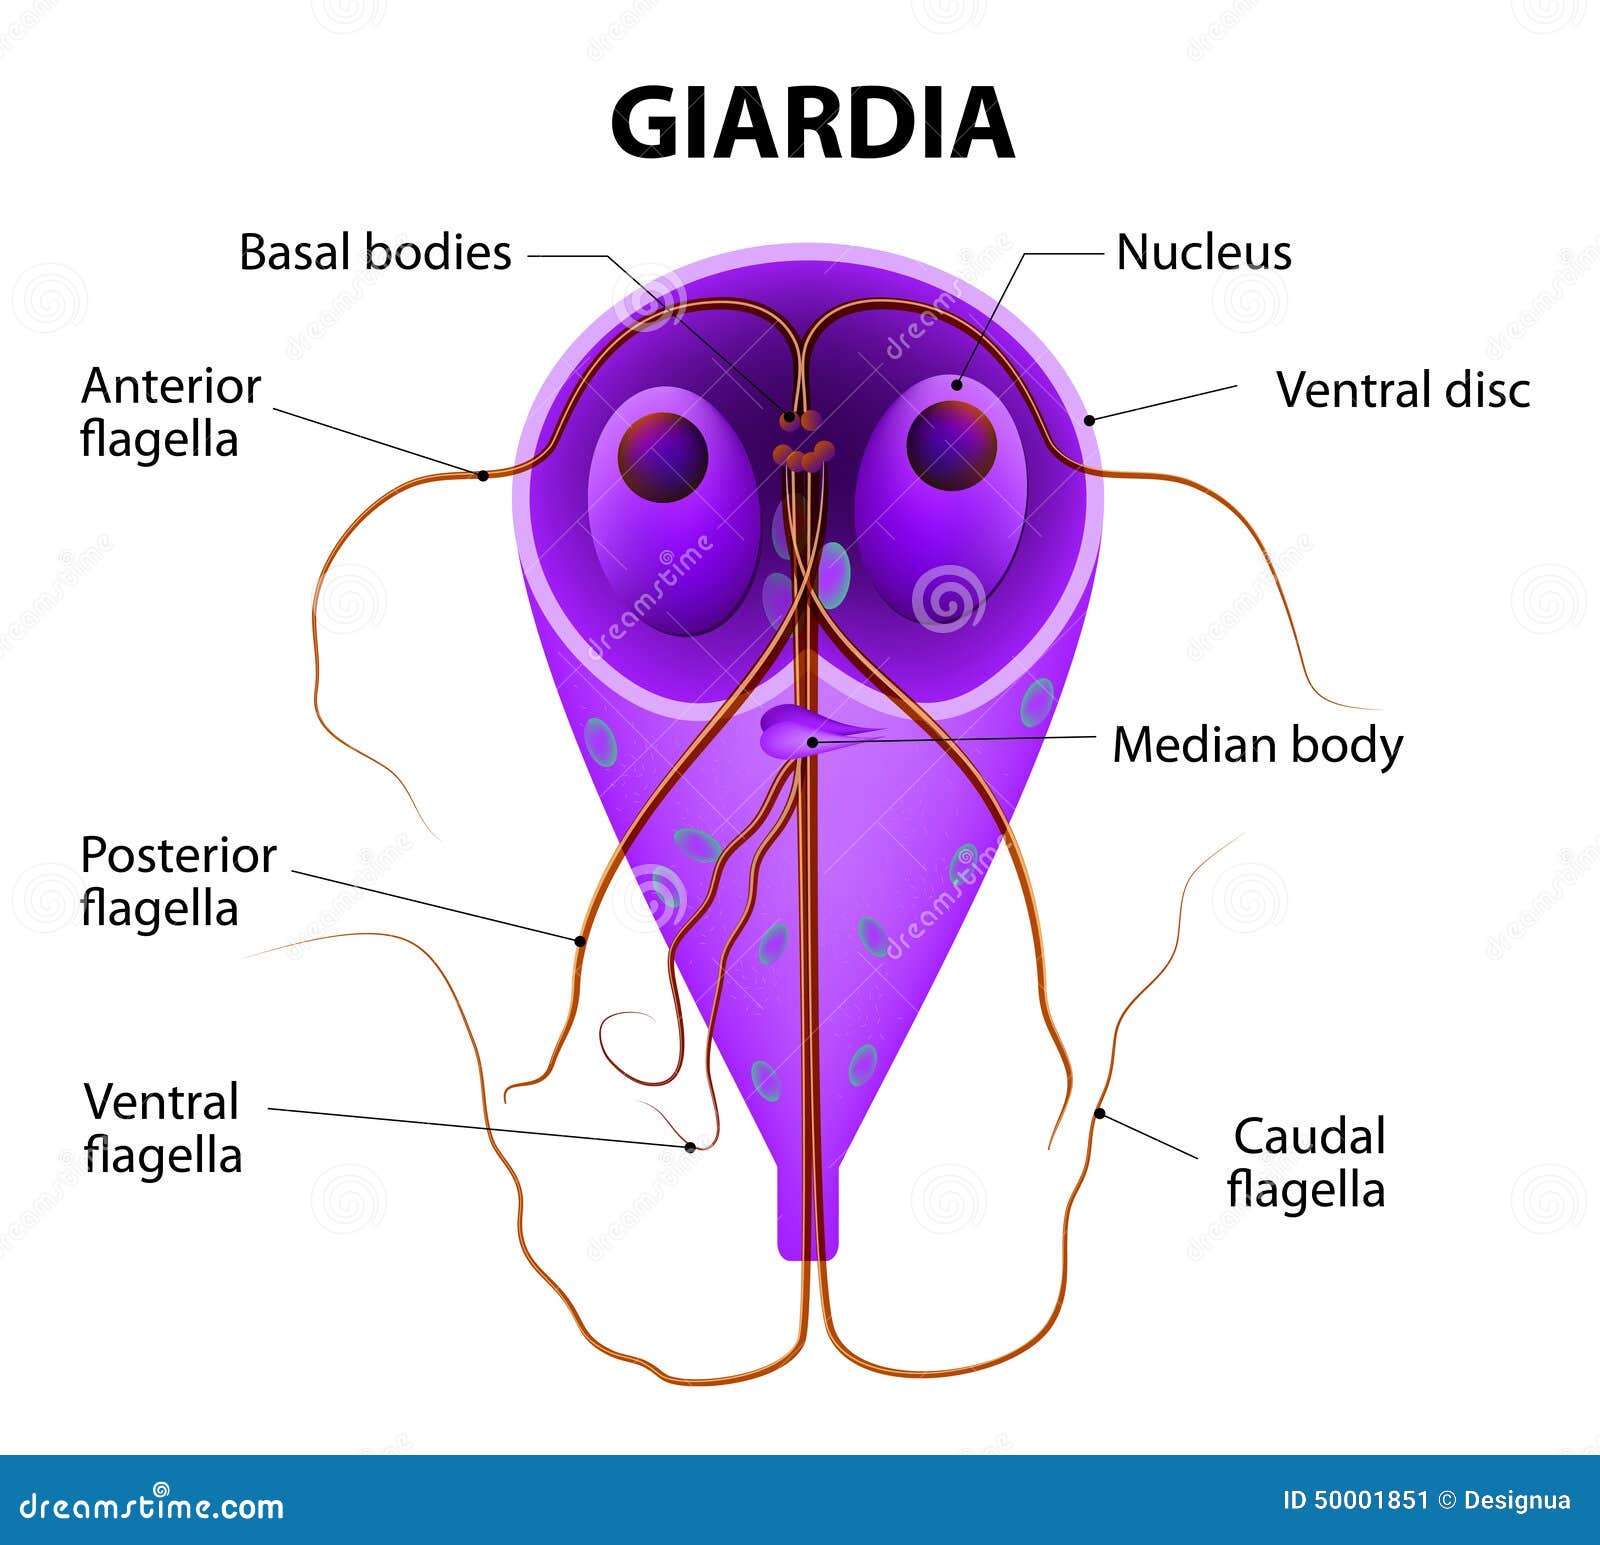 Giardia duodenalis prévention. Gyomor-bélhurut – Wikipédia